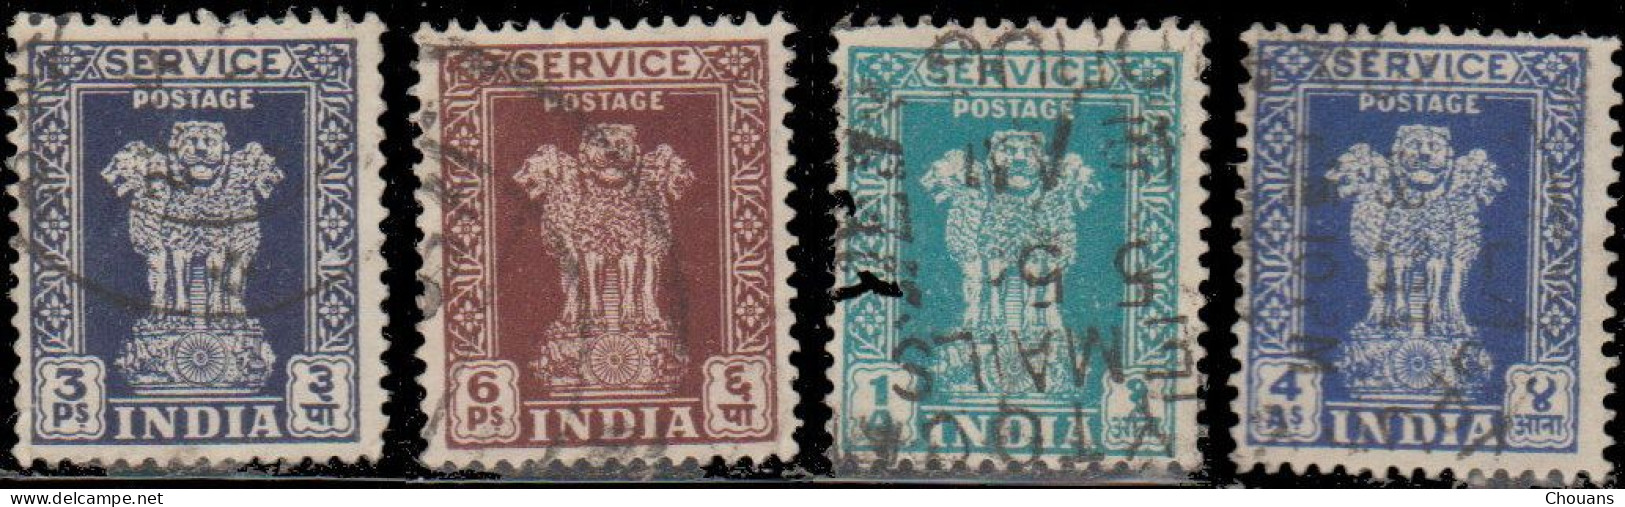 Inde Service 1950/51 - S 1D/7A -  Colonne D'Asoka (4 V.) - Official Stamps